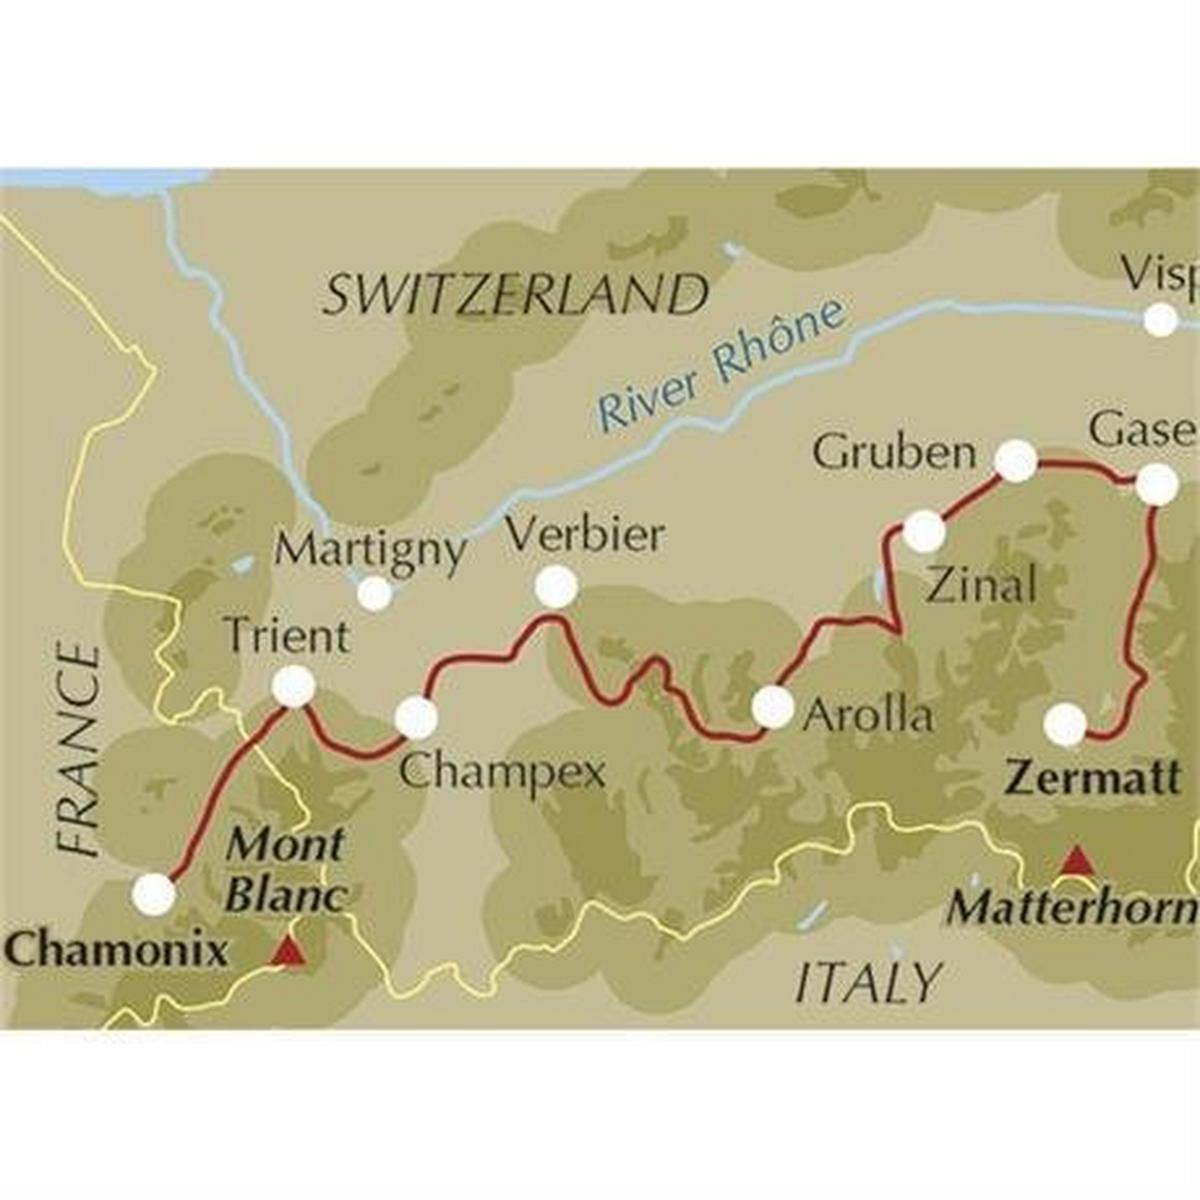 Cicerone Walking Guide Book: Trekking Chamonix to Zermatt